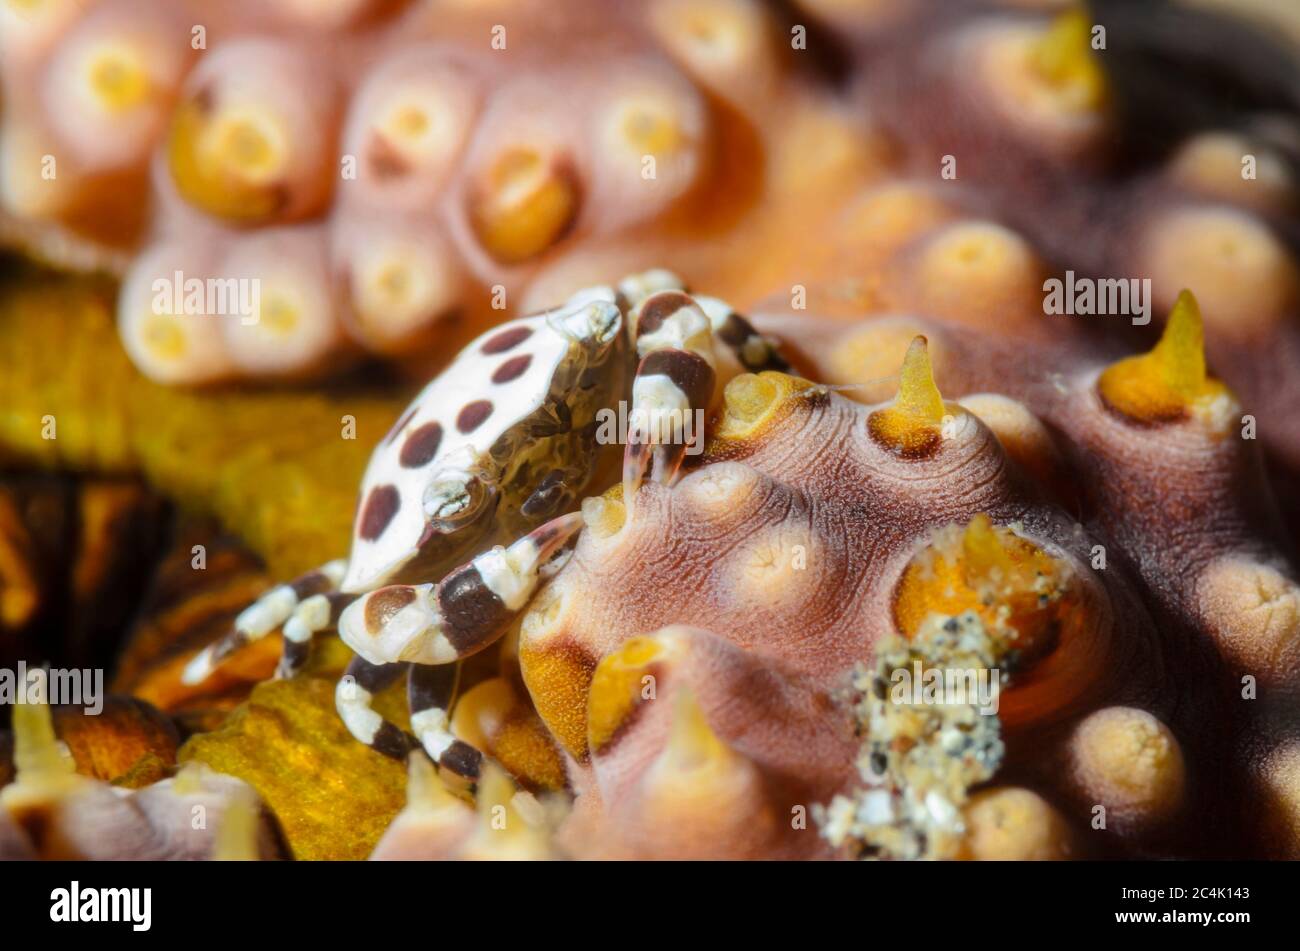 Sea cucumber swimming crab, Lissocarcinus orbicularis, lives on sea cucumbers, Lembeh Strait, North Sulawesi, Indonesia, Pacific Stock Photo